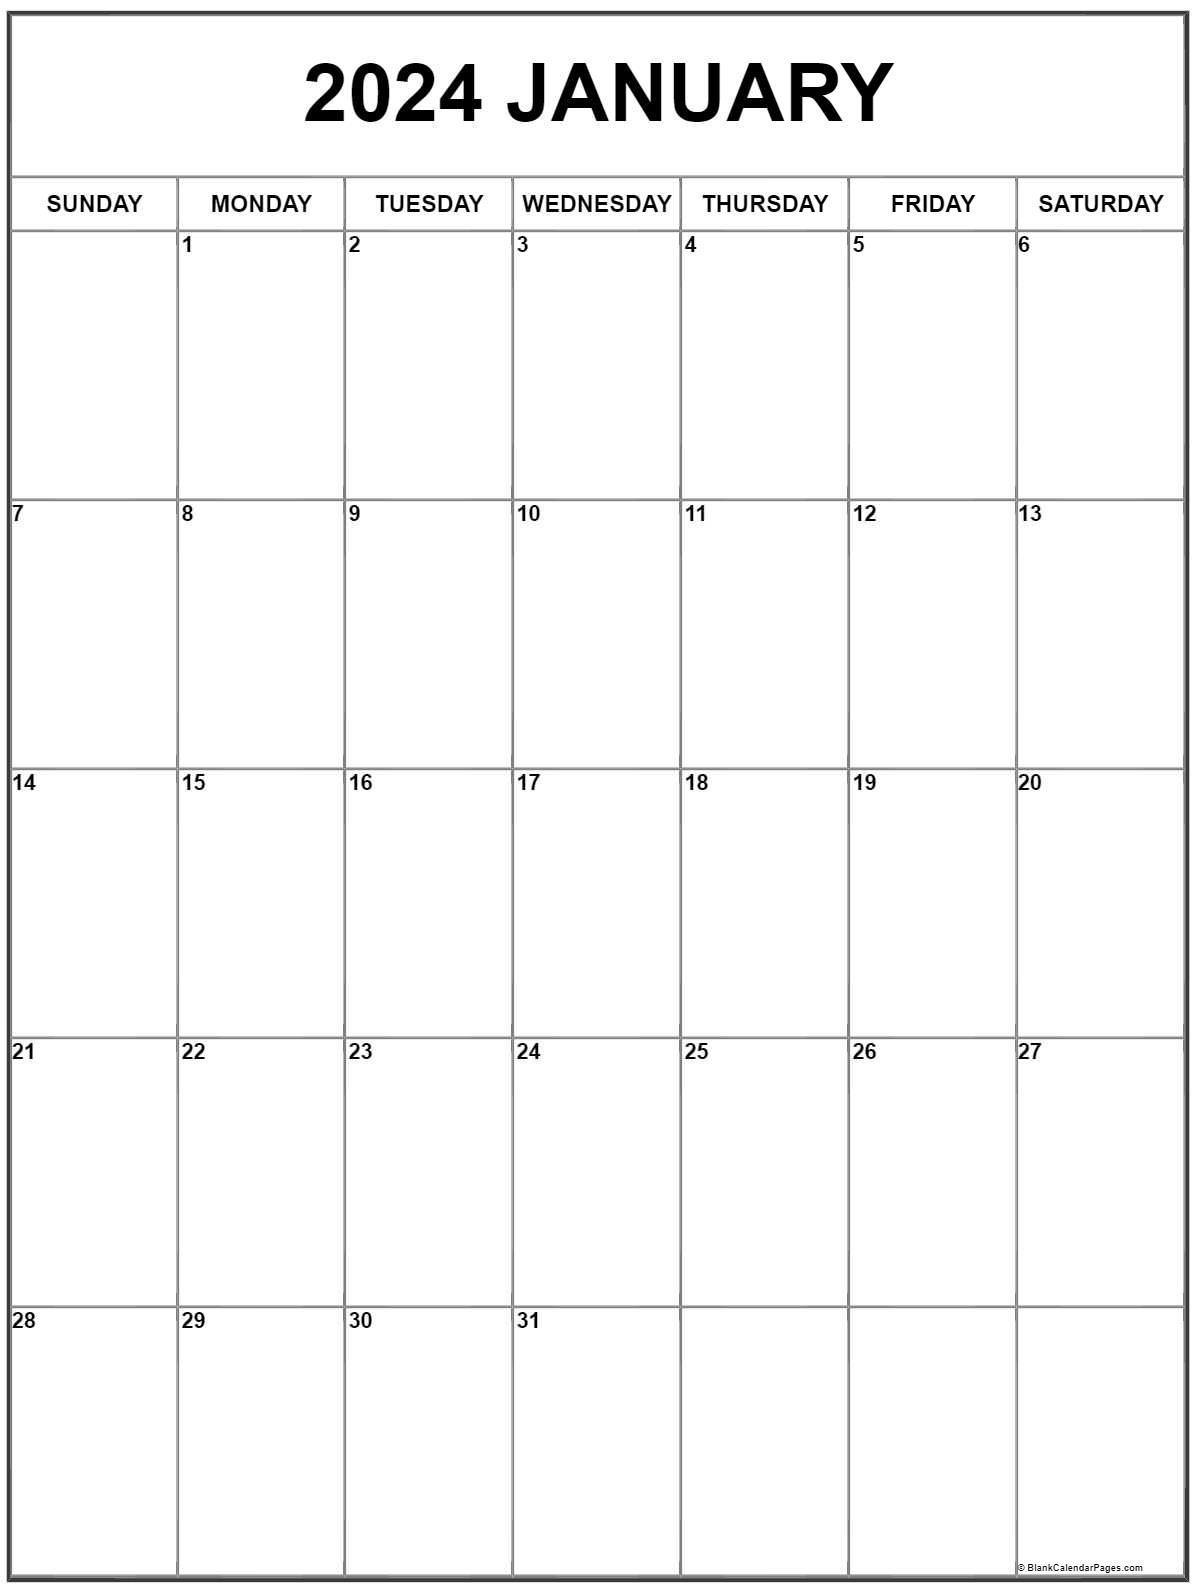 2024 Printable Calendar By Month Vertical Matty Shellie